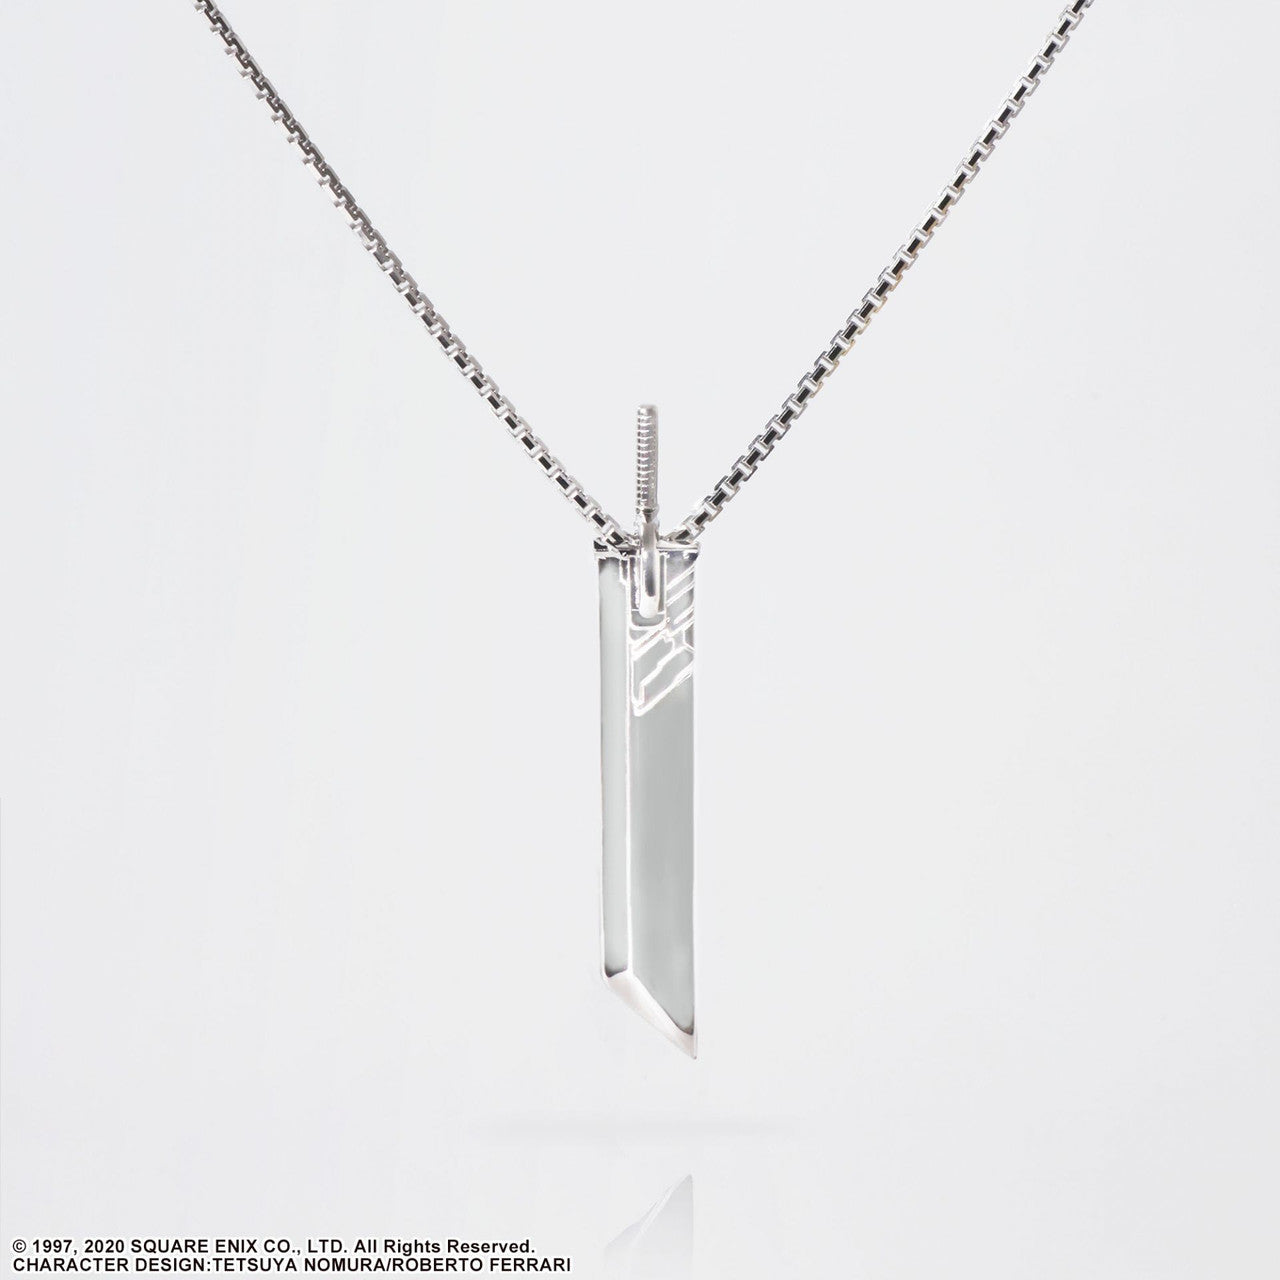 Final Fantasy VII Remake Silver Necklace - Buster Sword Limited Ver. (Reissue)